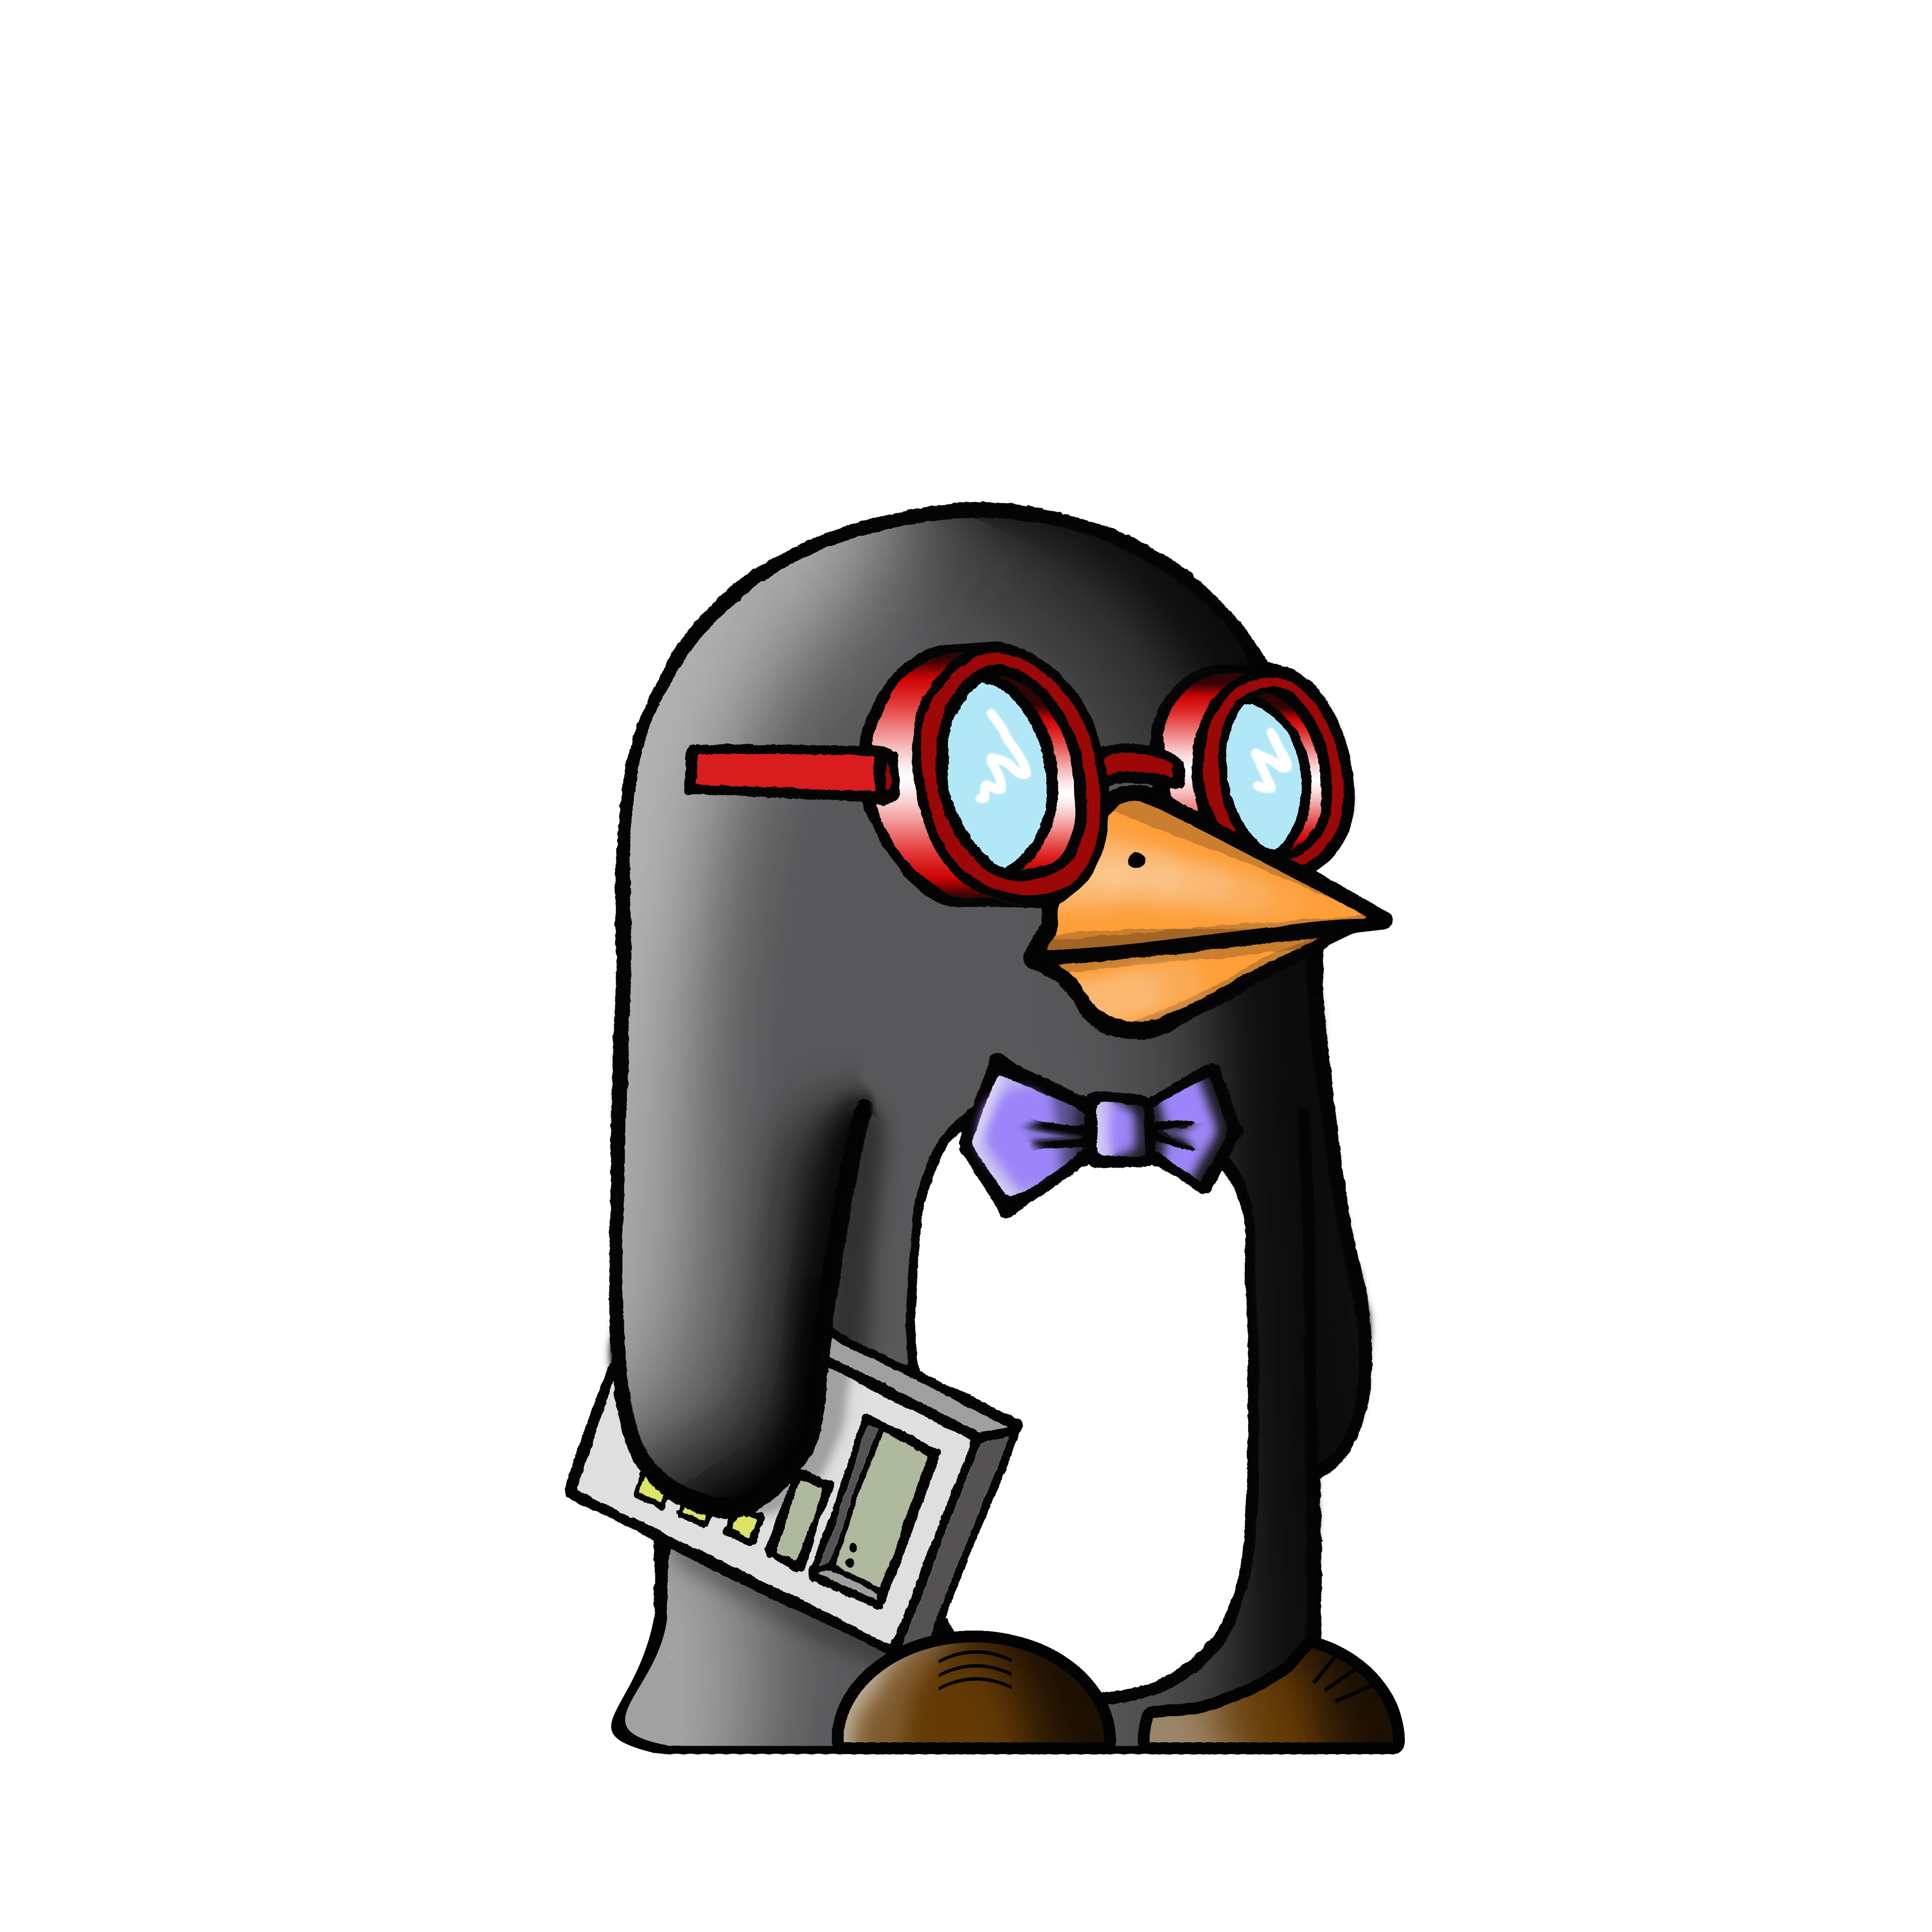 math clipart penguin